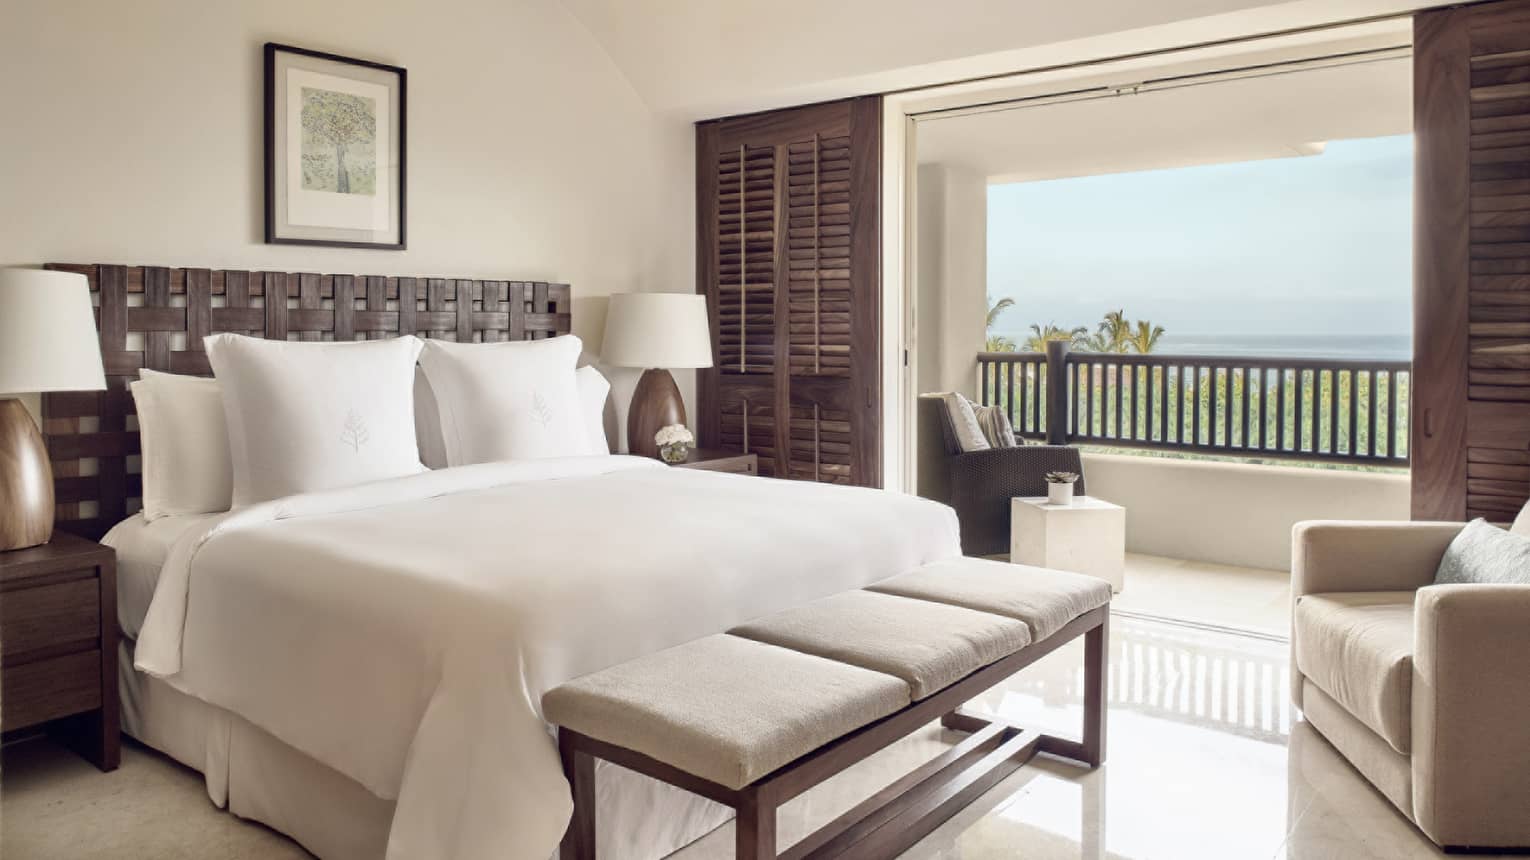 Bedroom with king bed, wooden shutter sliding doors and ocean view